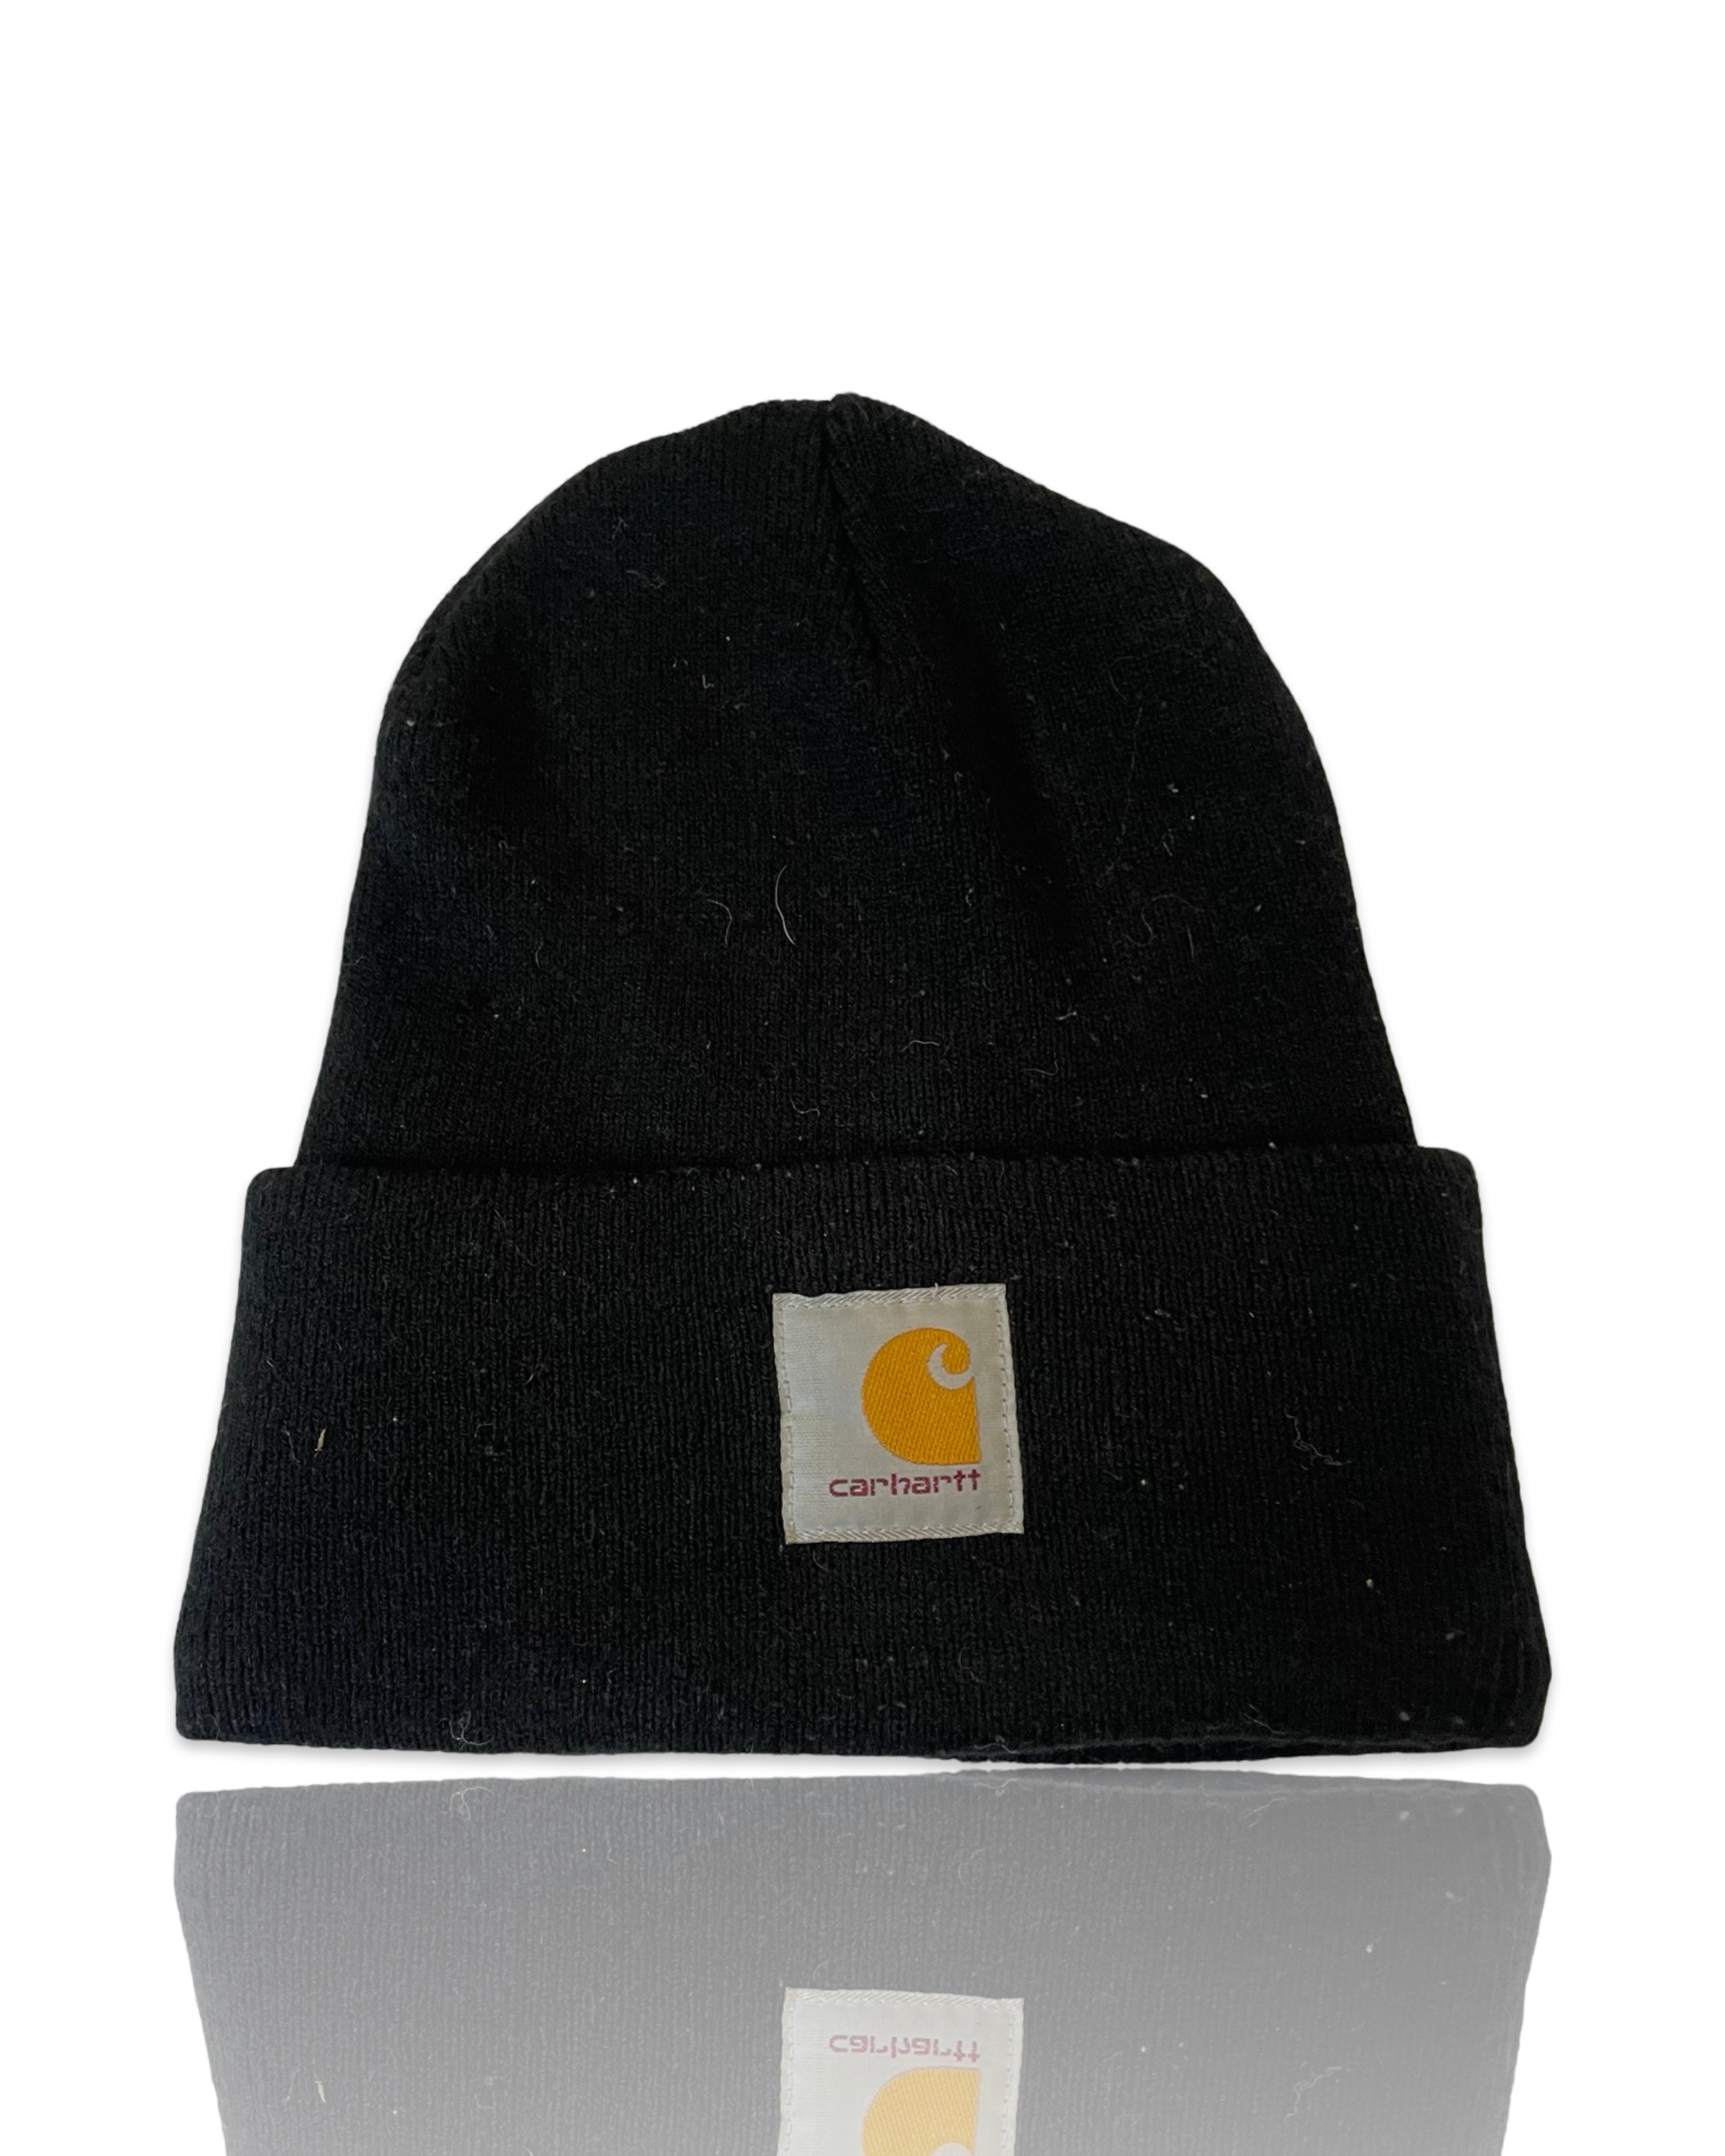 Carhartt Men's Acrylic Hats Black Hat |SKU 4186